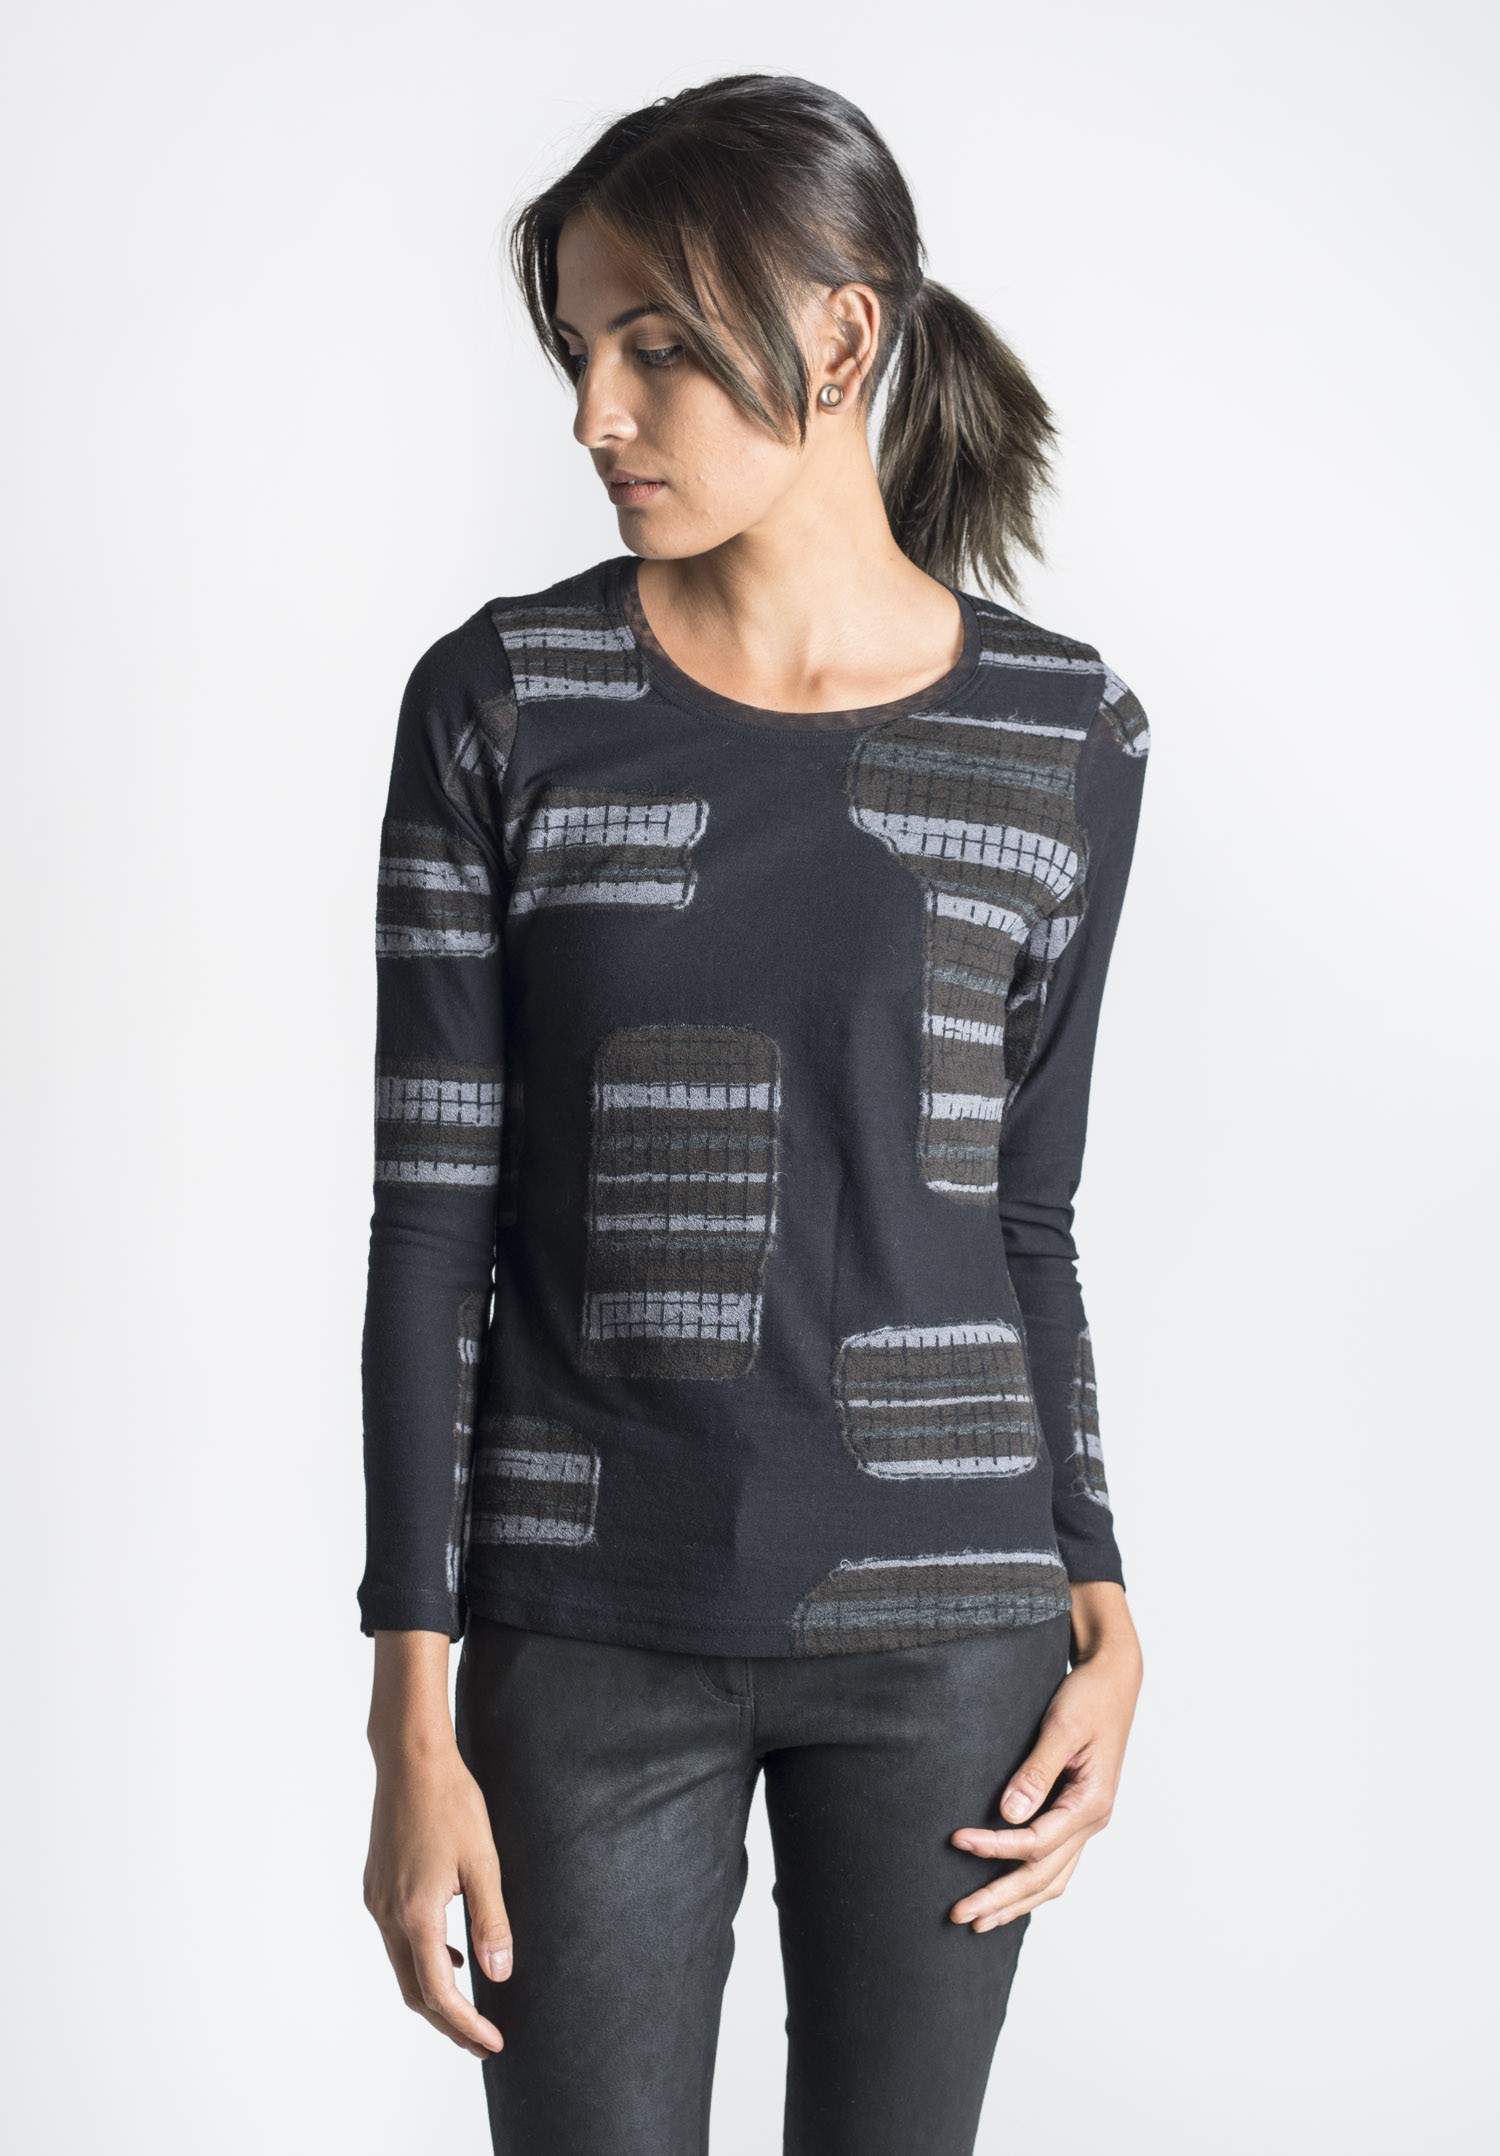 Yoshi Yoshi Patch Sweater in Black | Santa Fe Dry Goods Trippen ...